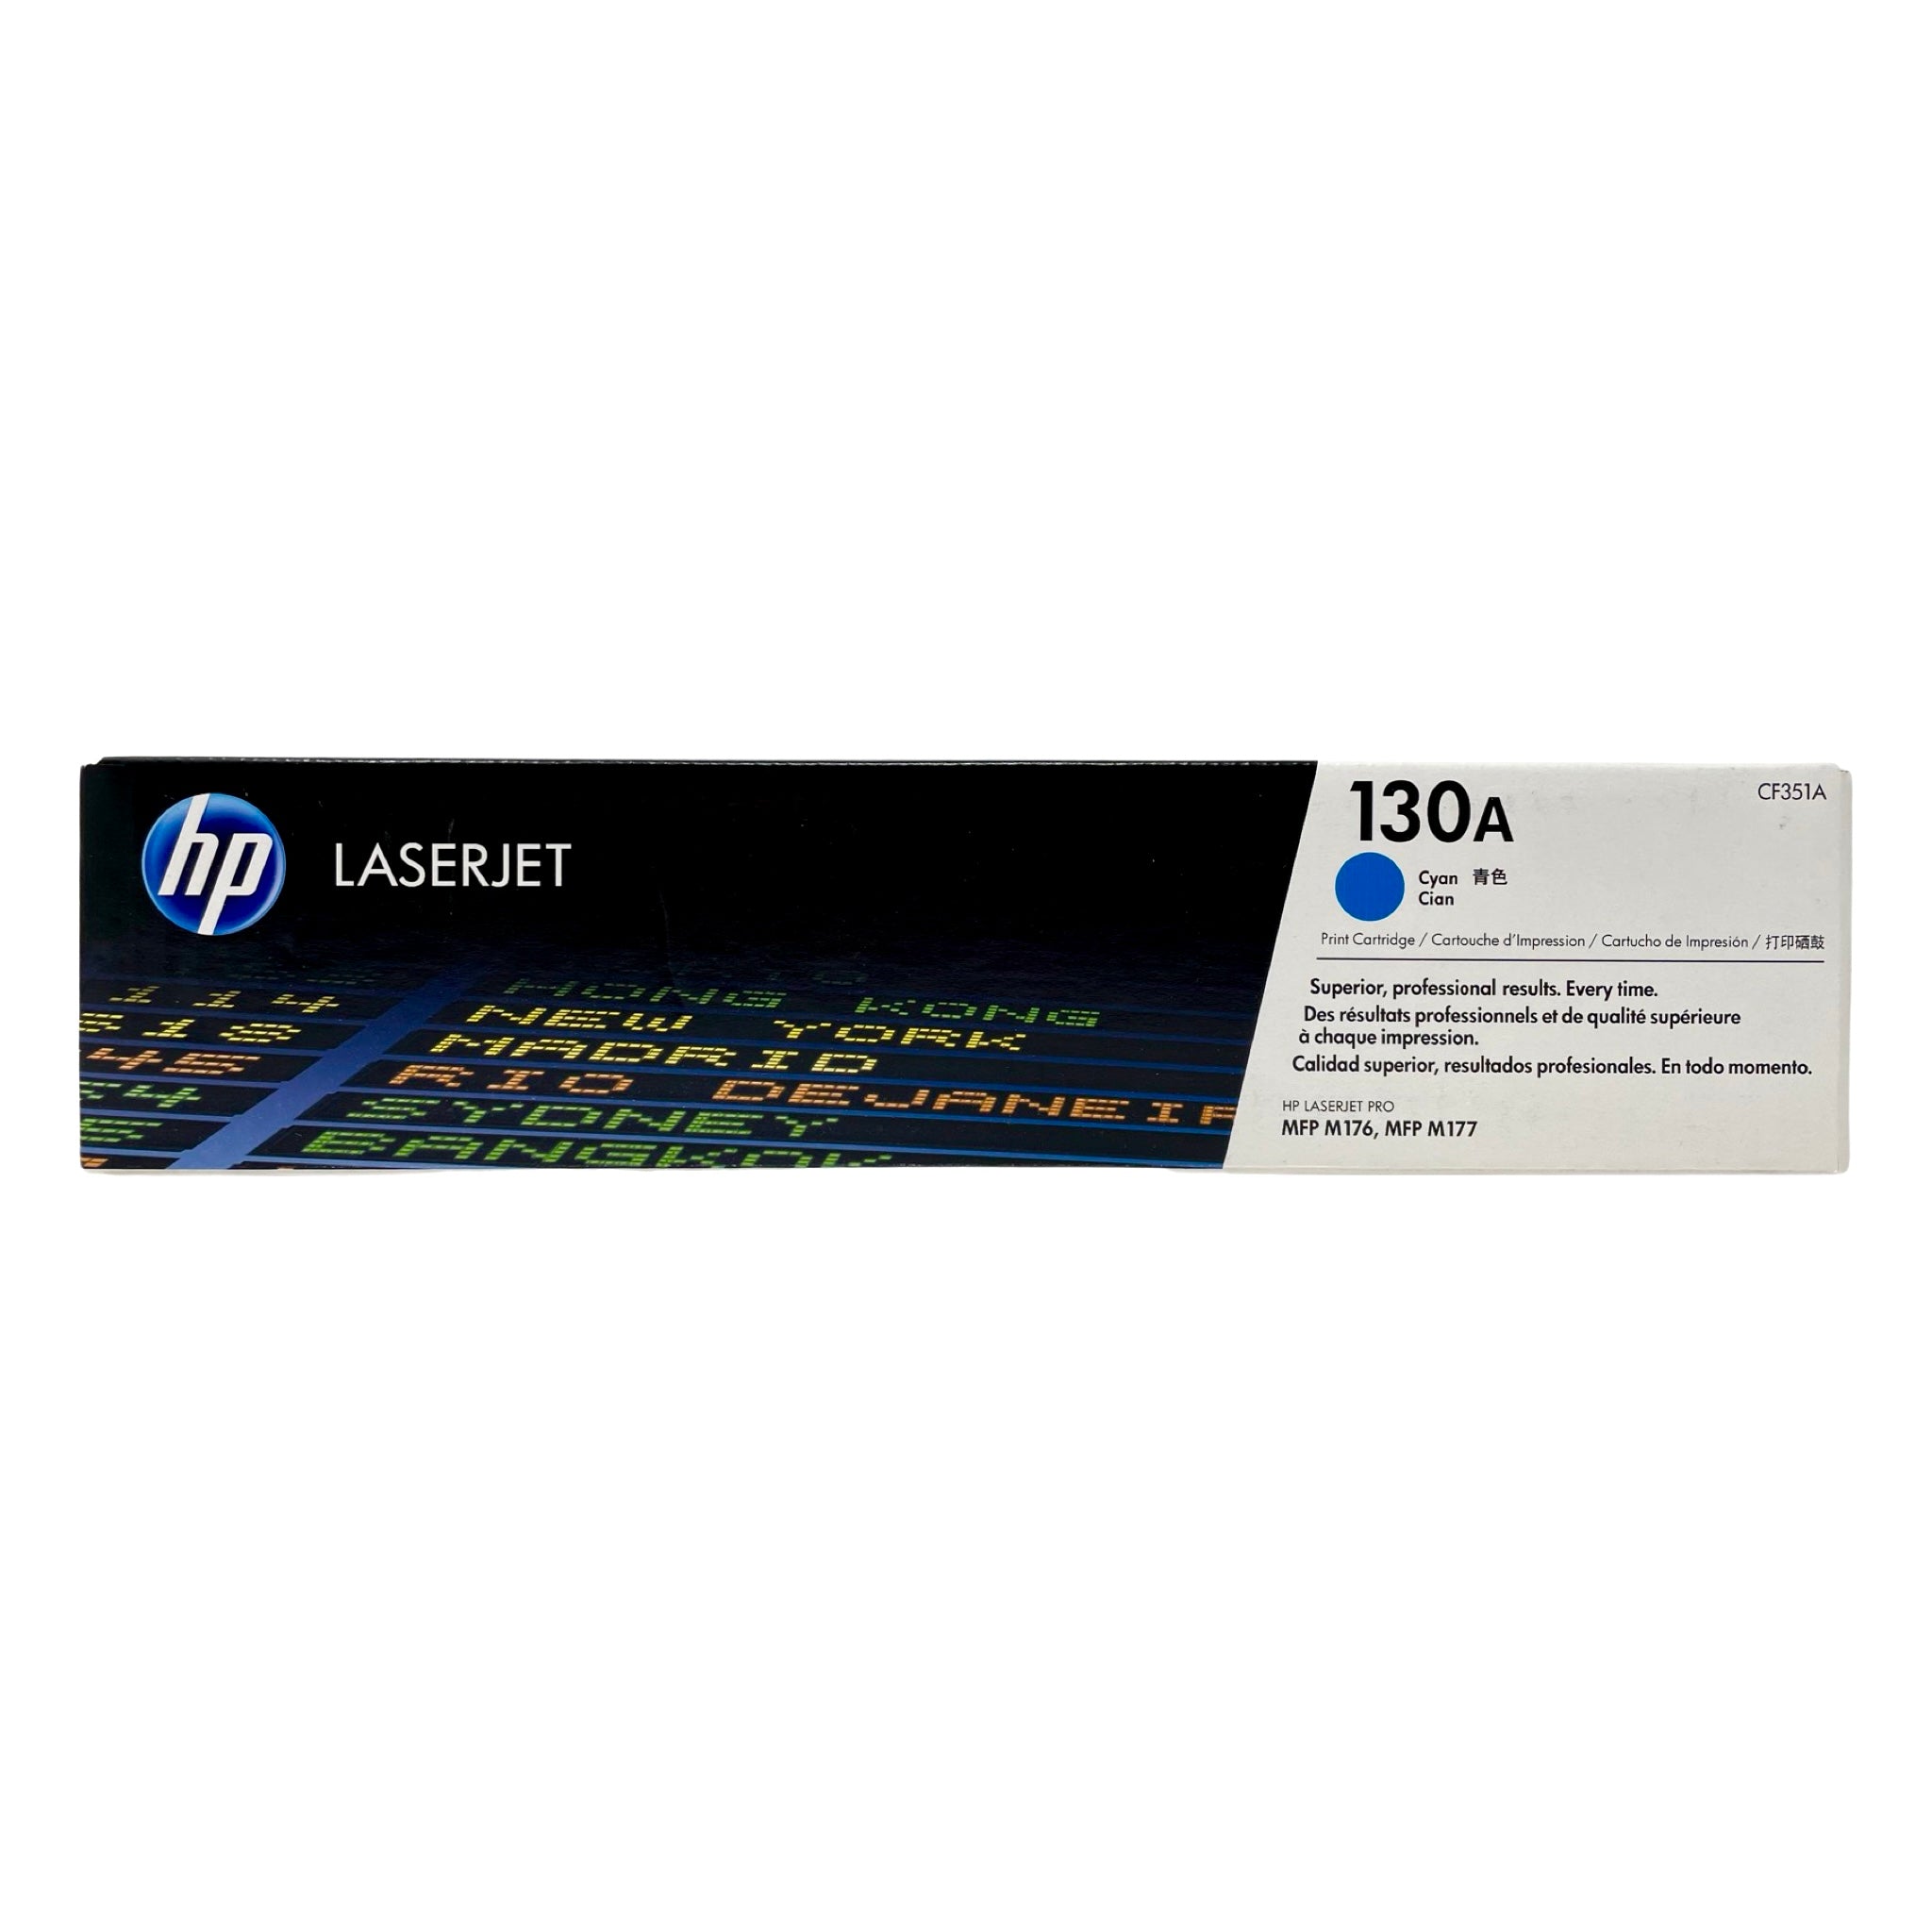 Genuine HP 130A Cyan CF351A LaserJet Toner Cartridge